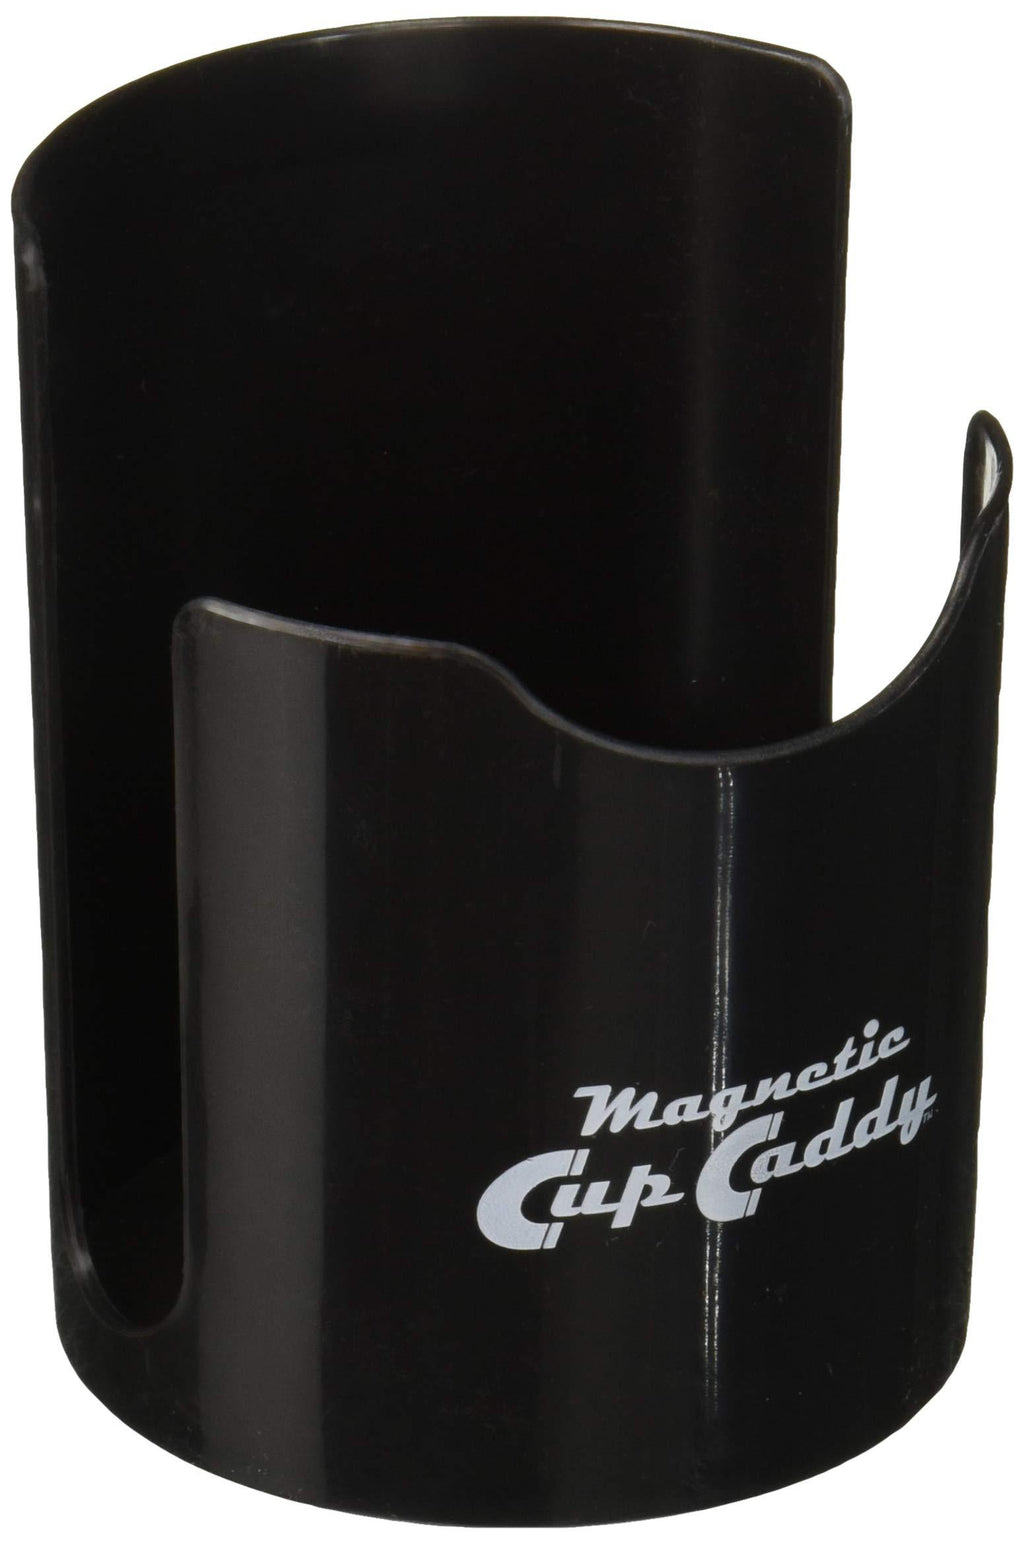  [AUSTRALIA] - Master Magnetics Magnetic Cup Caddy Holder - Black - Keep Your Favorite Beverage at Hand